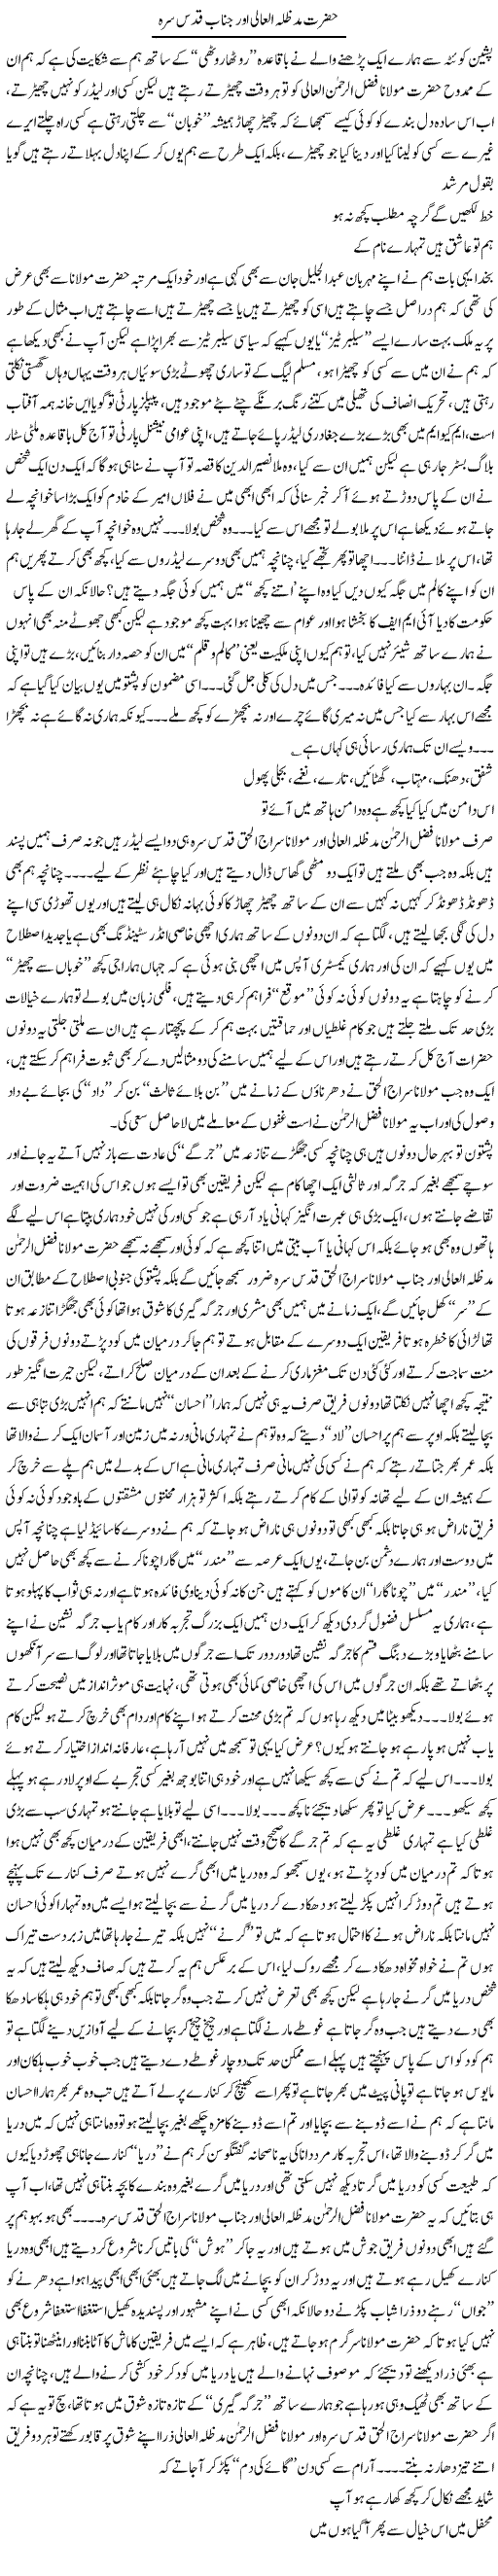 Hazrat Maddo Zillah Aali Aur Janab Quddas Sirra | Saad Ullah Jan Barq | Daily Urdu Columns